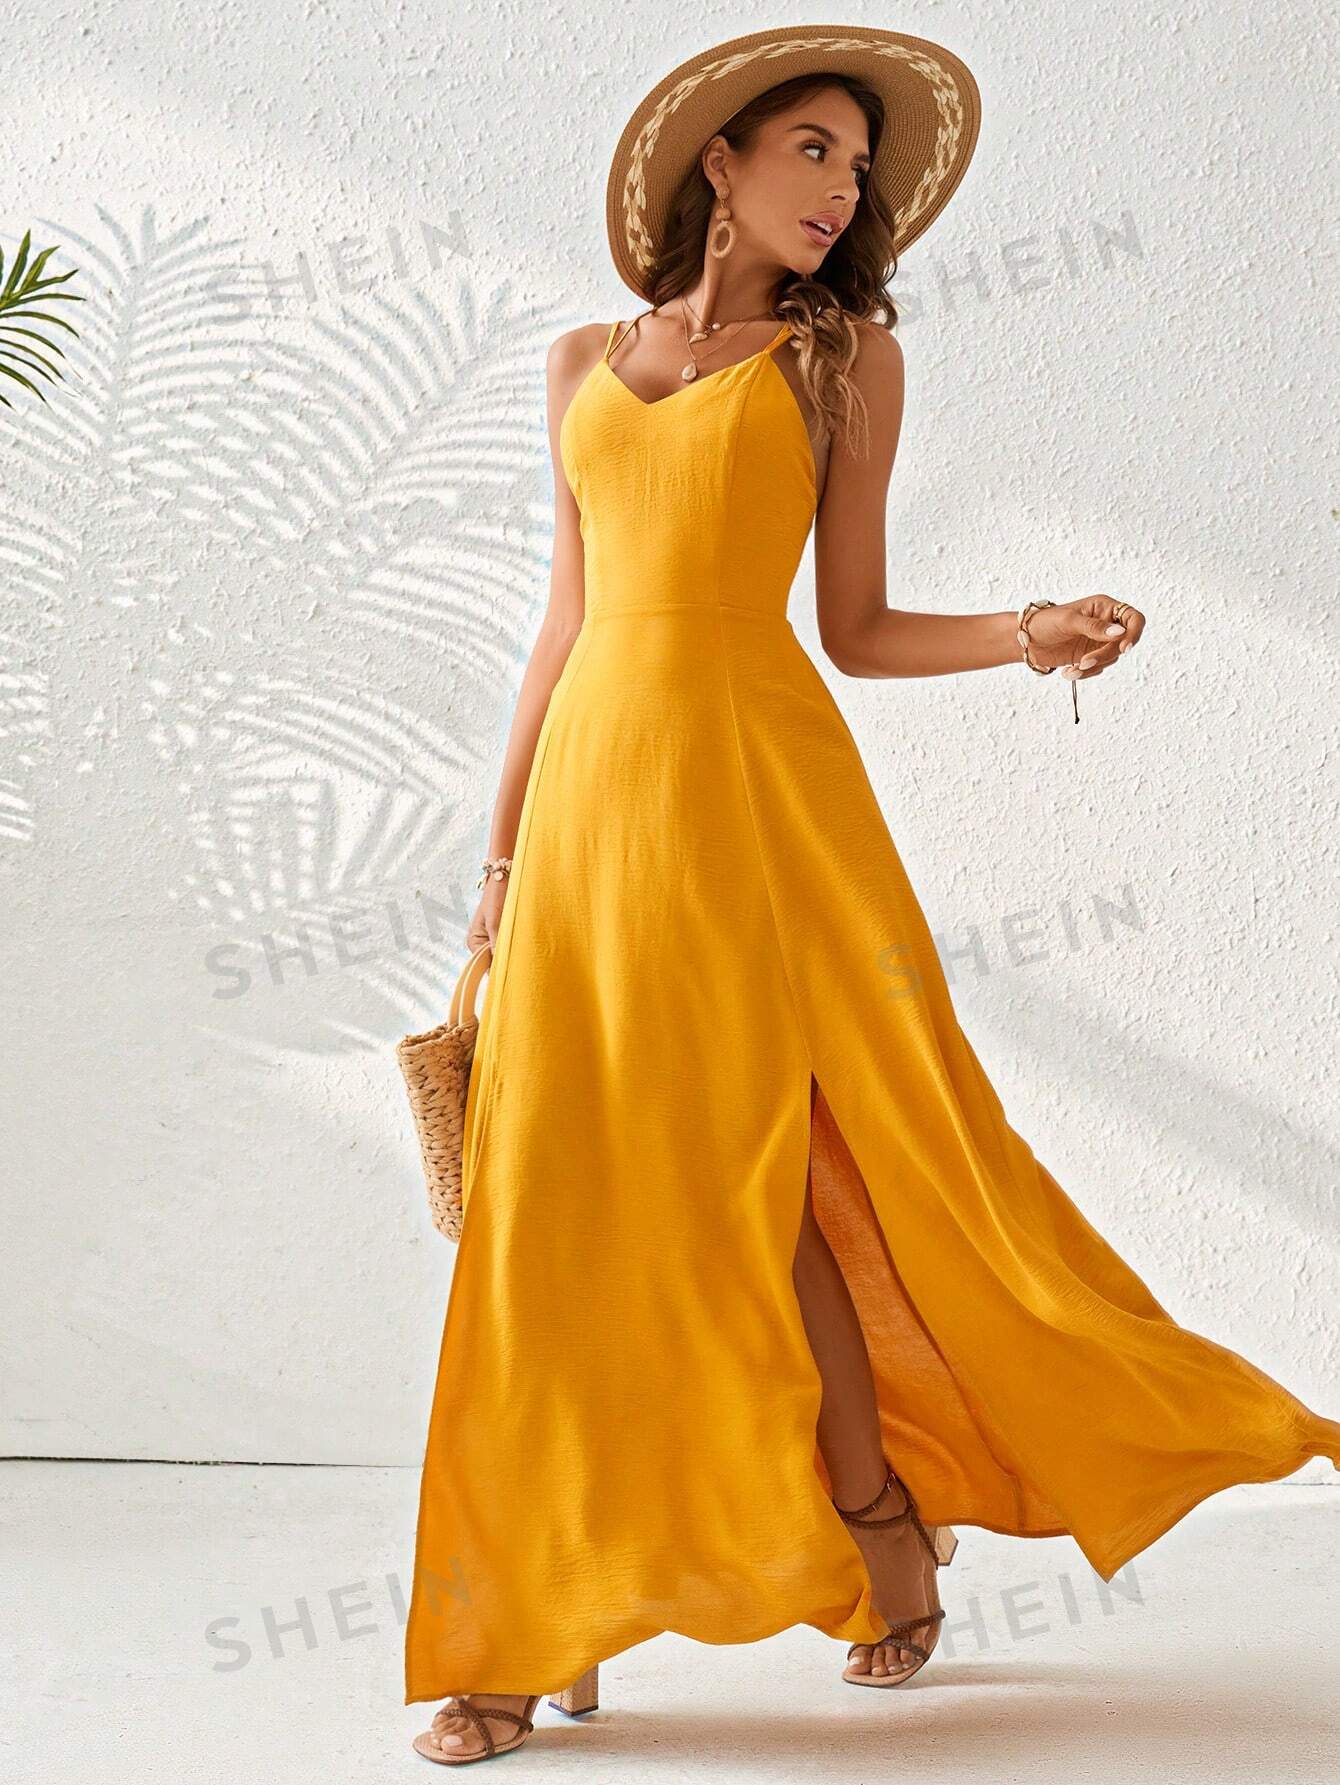 SHEIN VCAY SHEIN Vcay однотонное женское платье макси в стиле отпуска в стиле кантри для концерта в стиле кантри, желтый